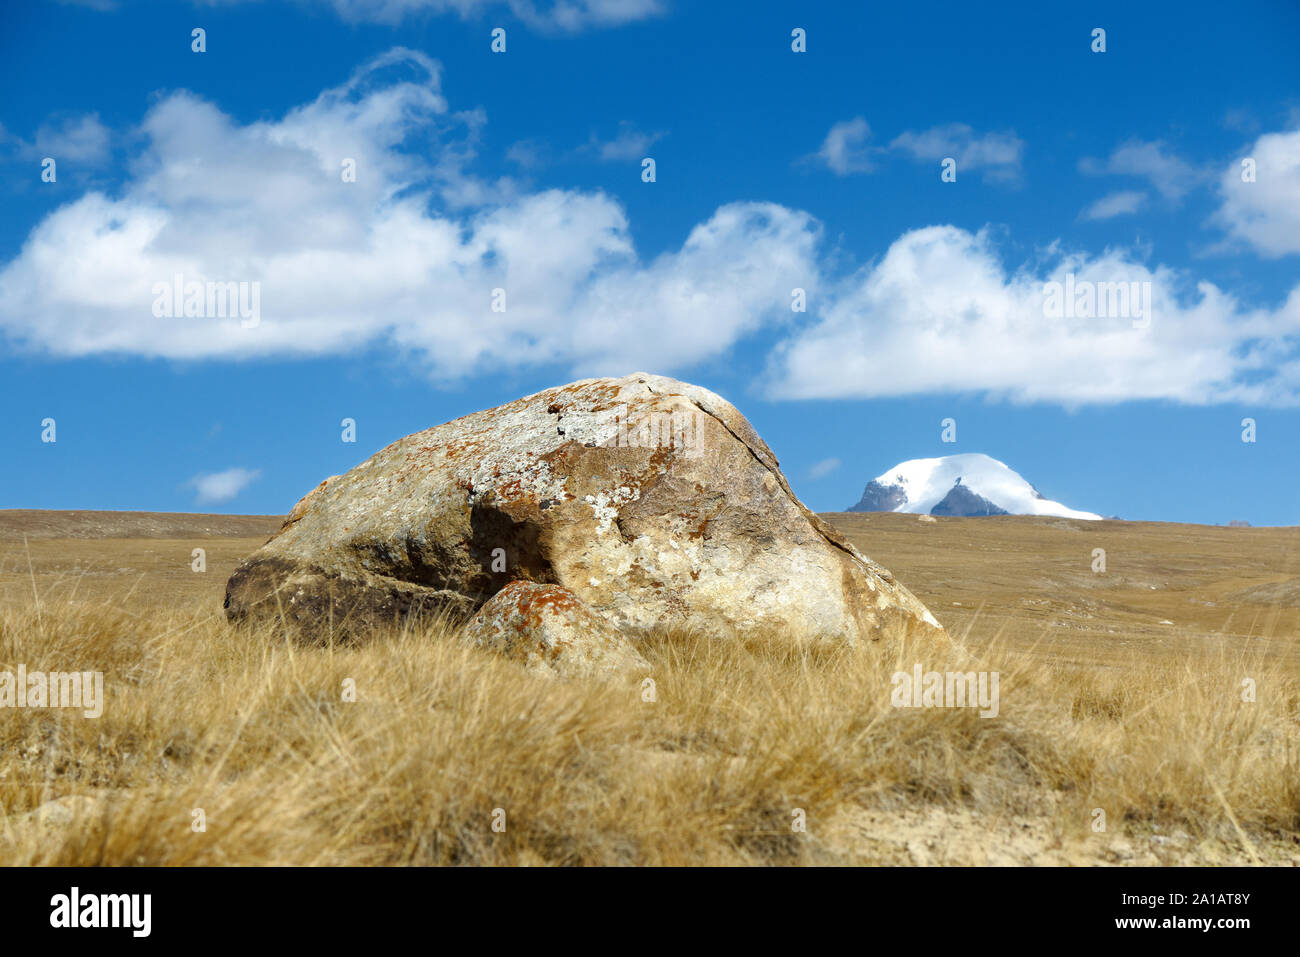 A big stone and a mountains peak. Stock Photo